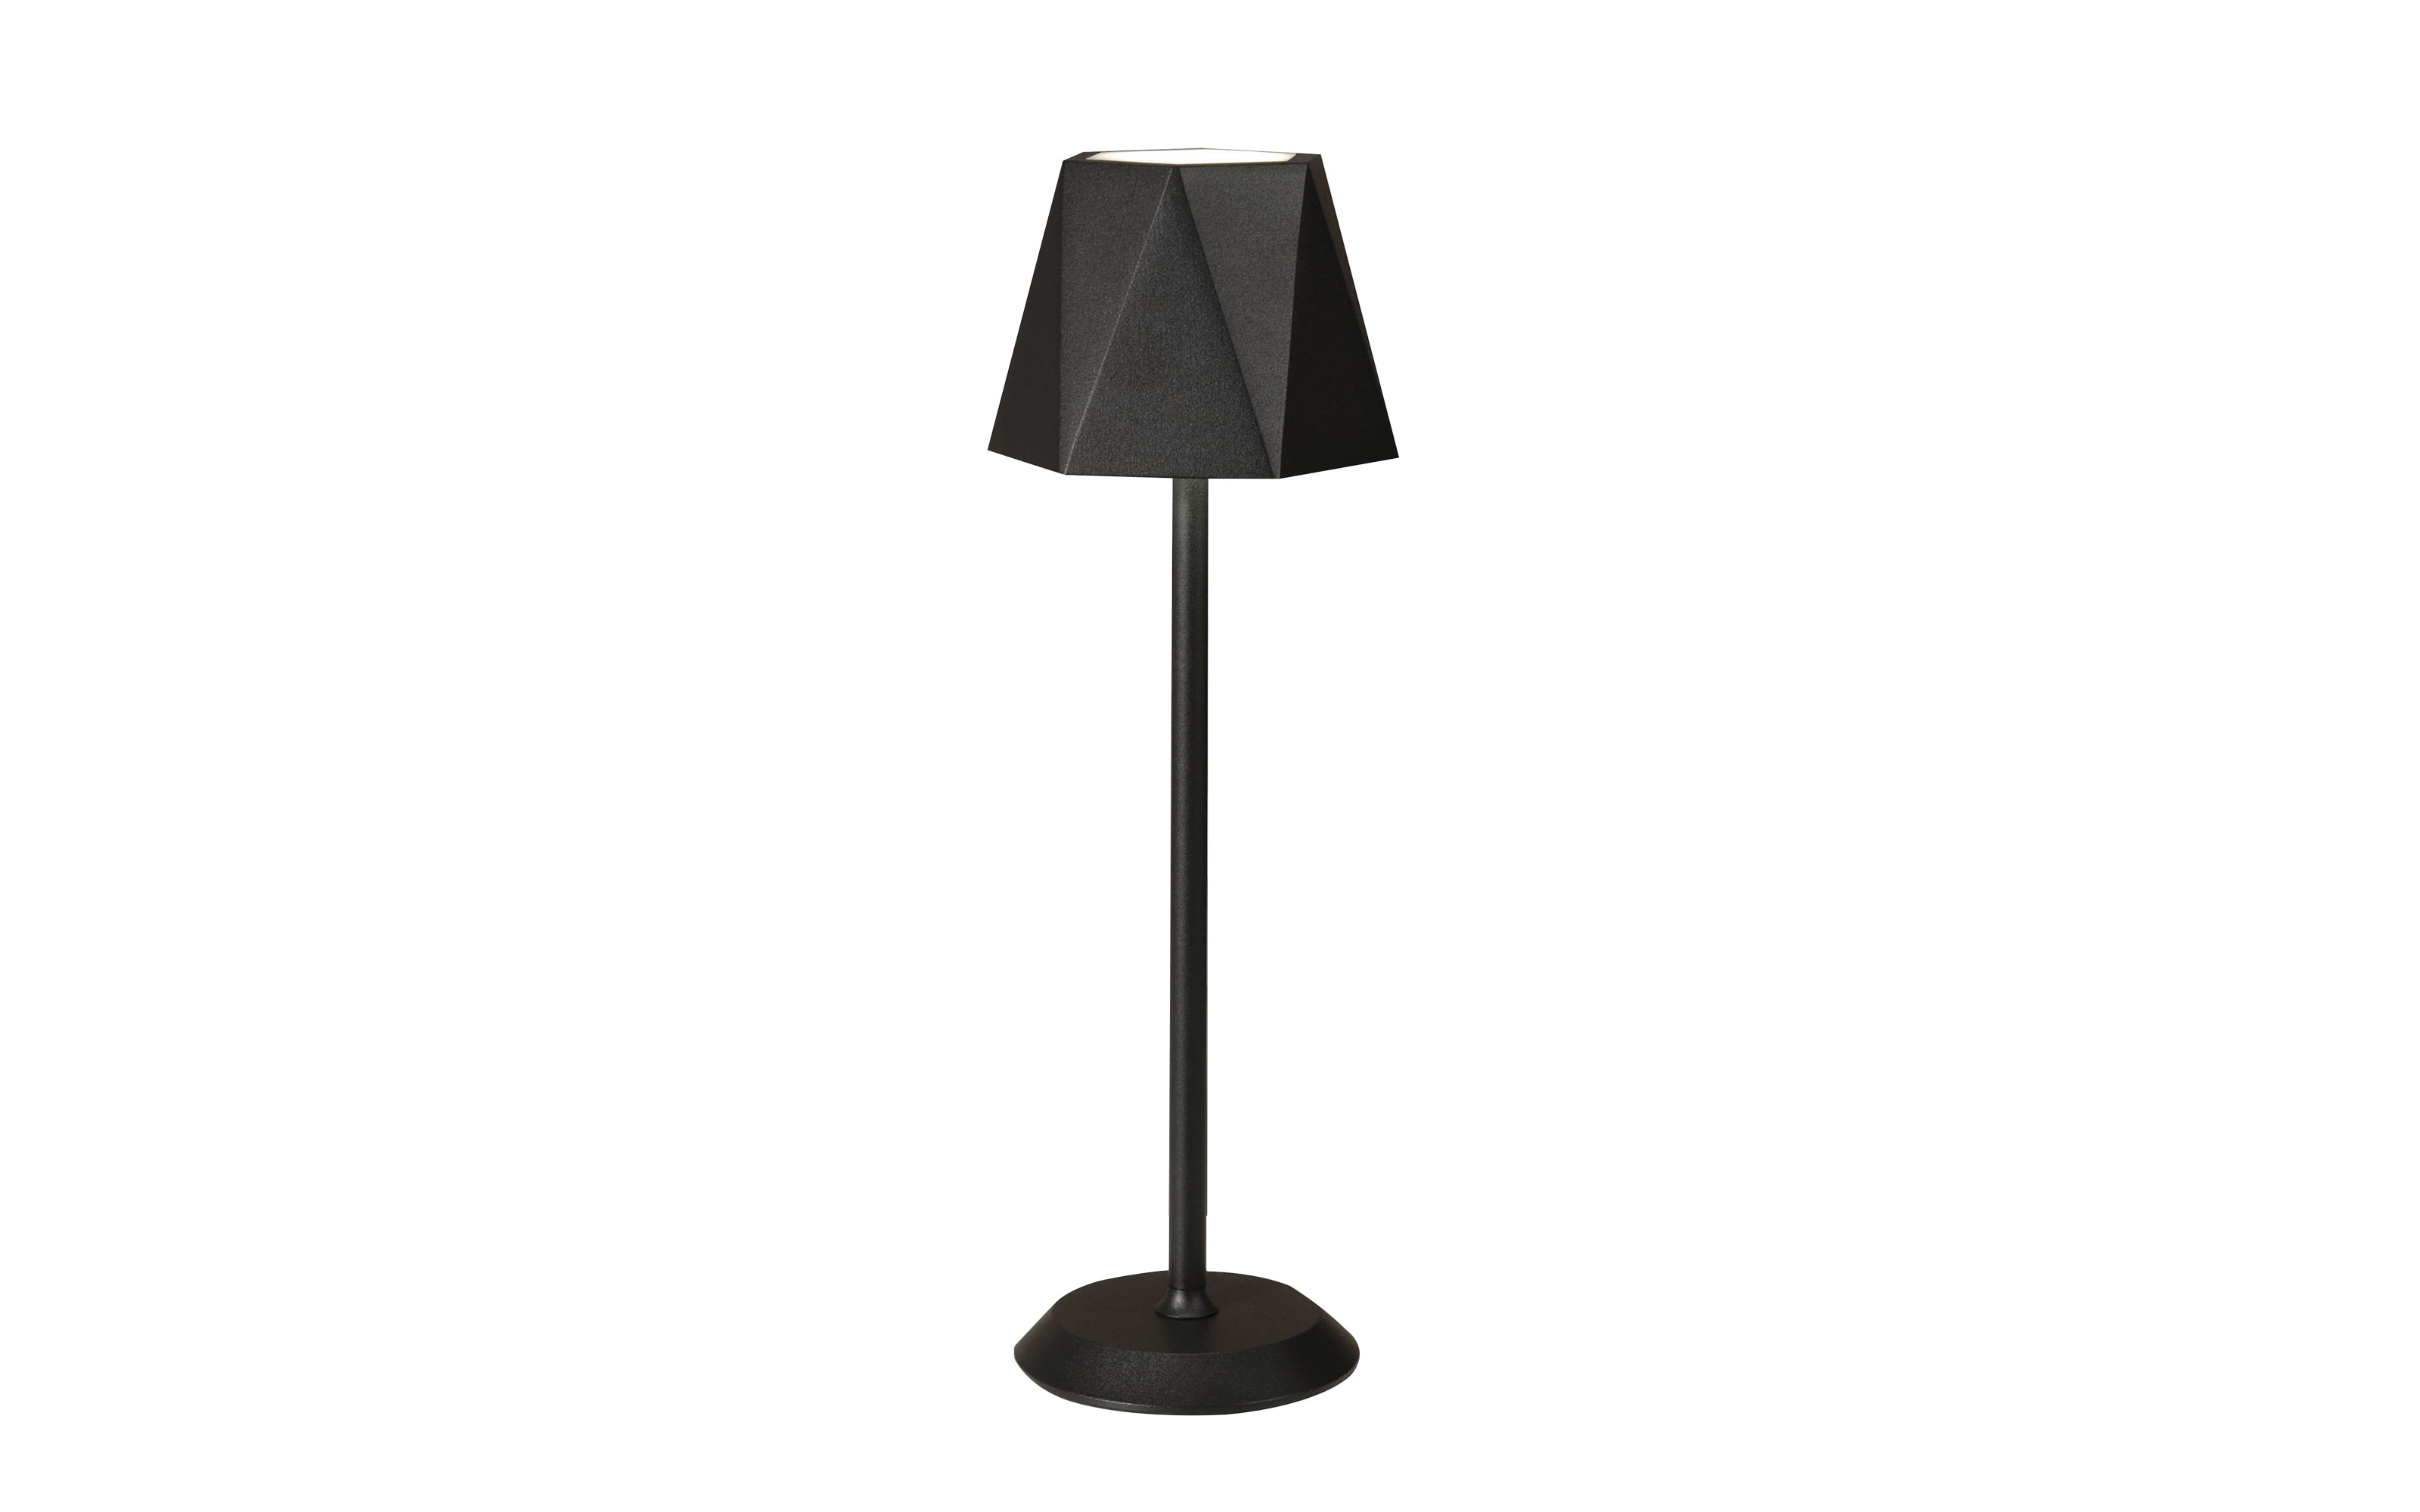 LED-Akku-Tischleuchte Katy in schwarz, 38 cm